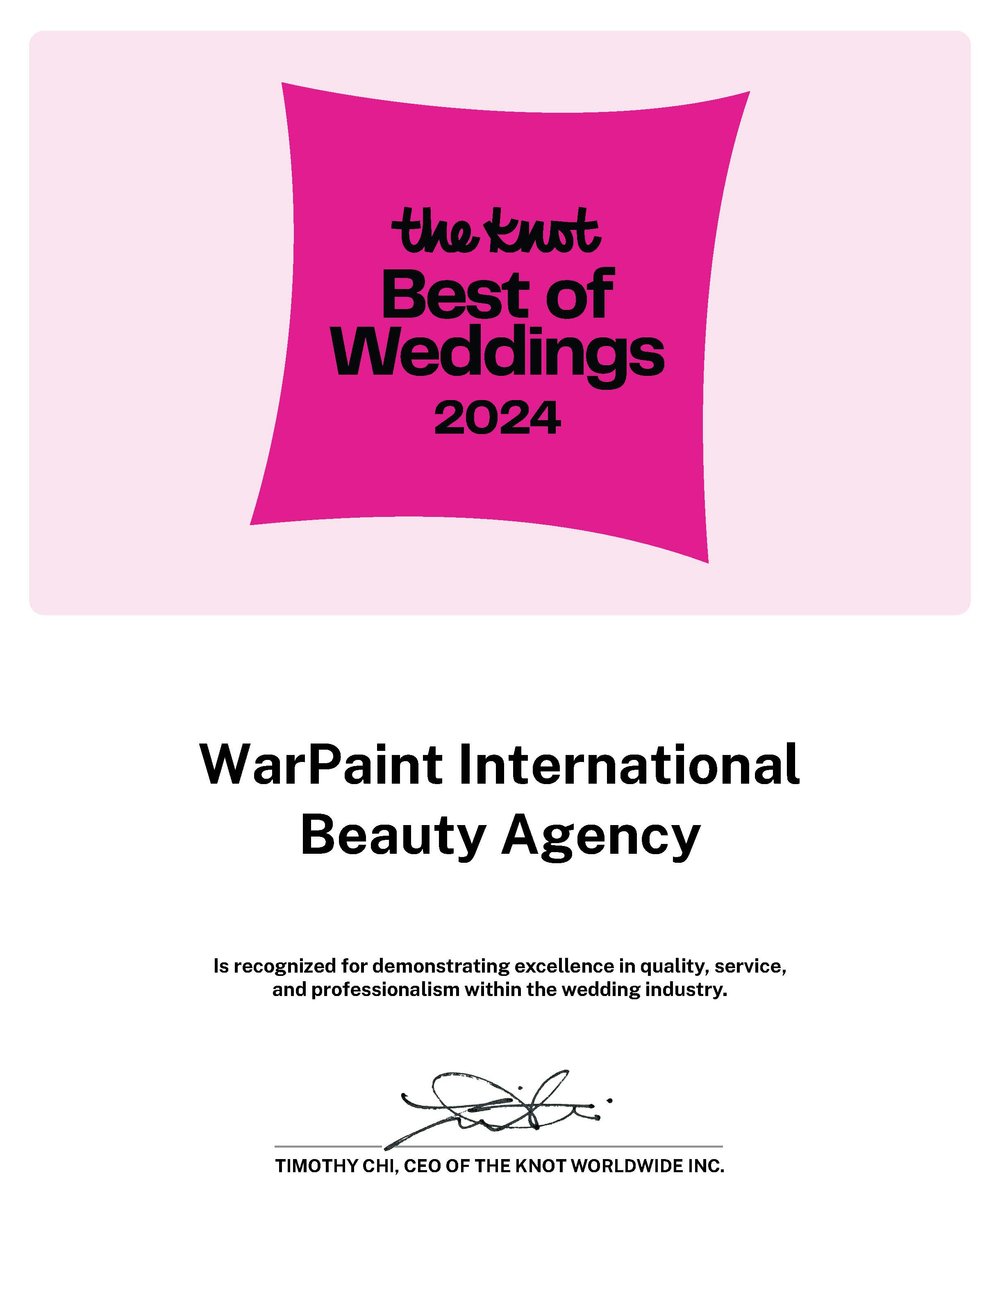 WarPaint International The Knot Best of Weddings Award 2024